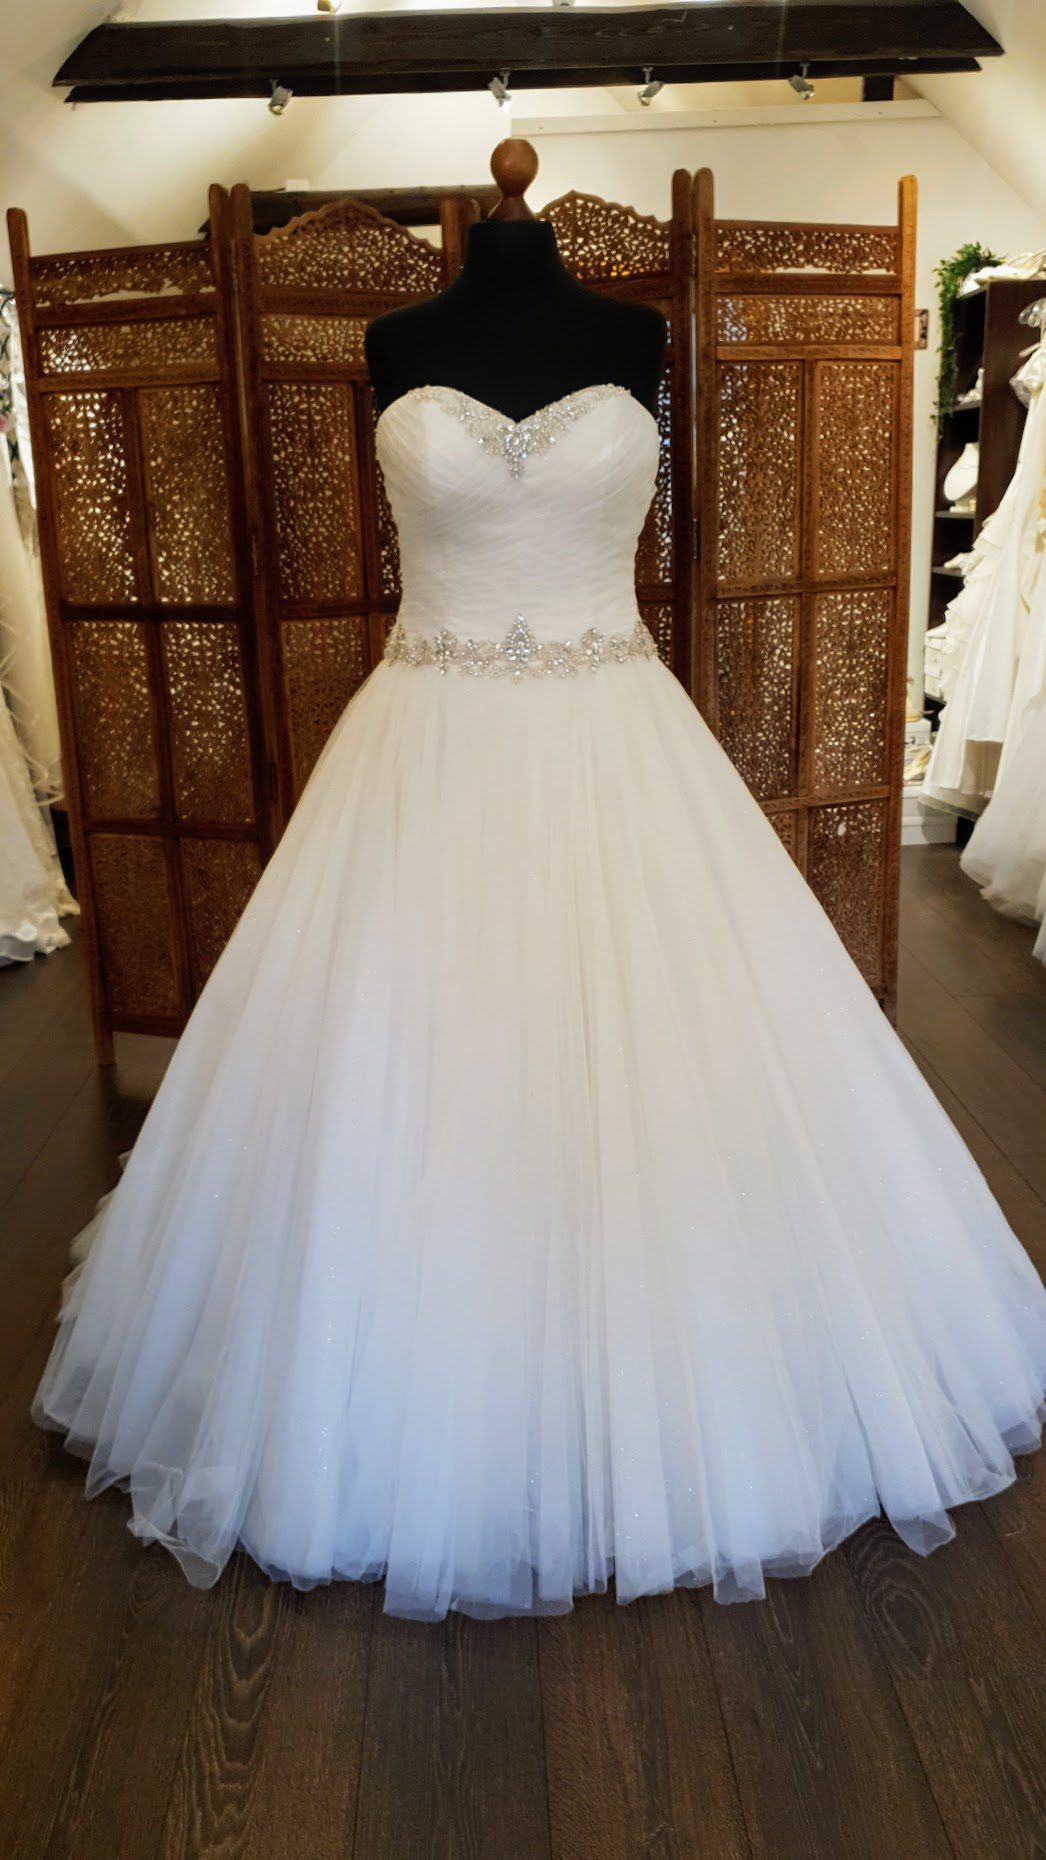 Prinsessekjole fra Special Day Bridal Wear. Model C18921. Corsagekjollen har smukke draperinger og er pyntet med rhinsten ved hjerteudskæringen og omkring taljen. Hele kjolen har glitter i sit tyl.